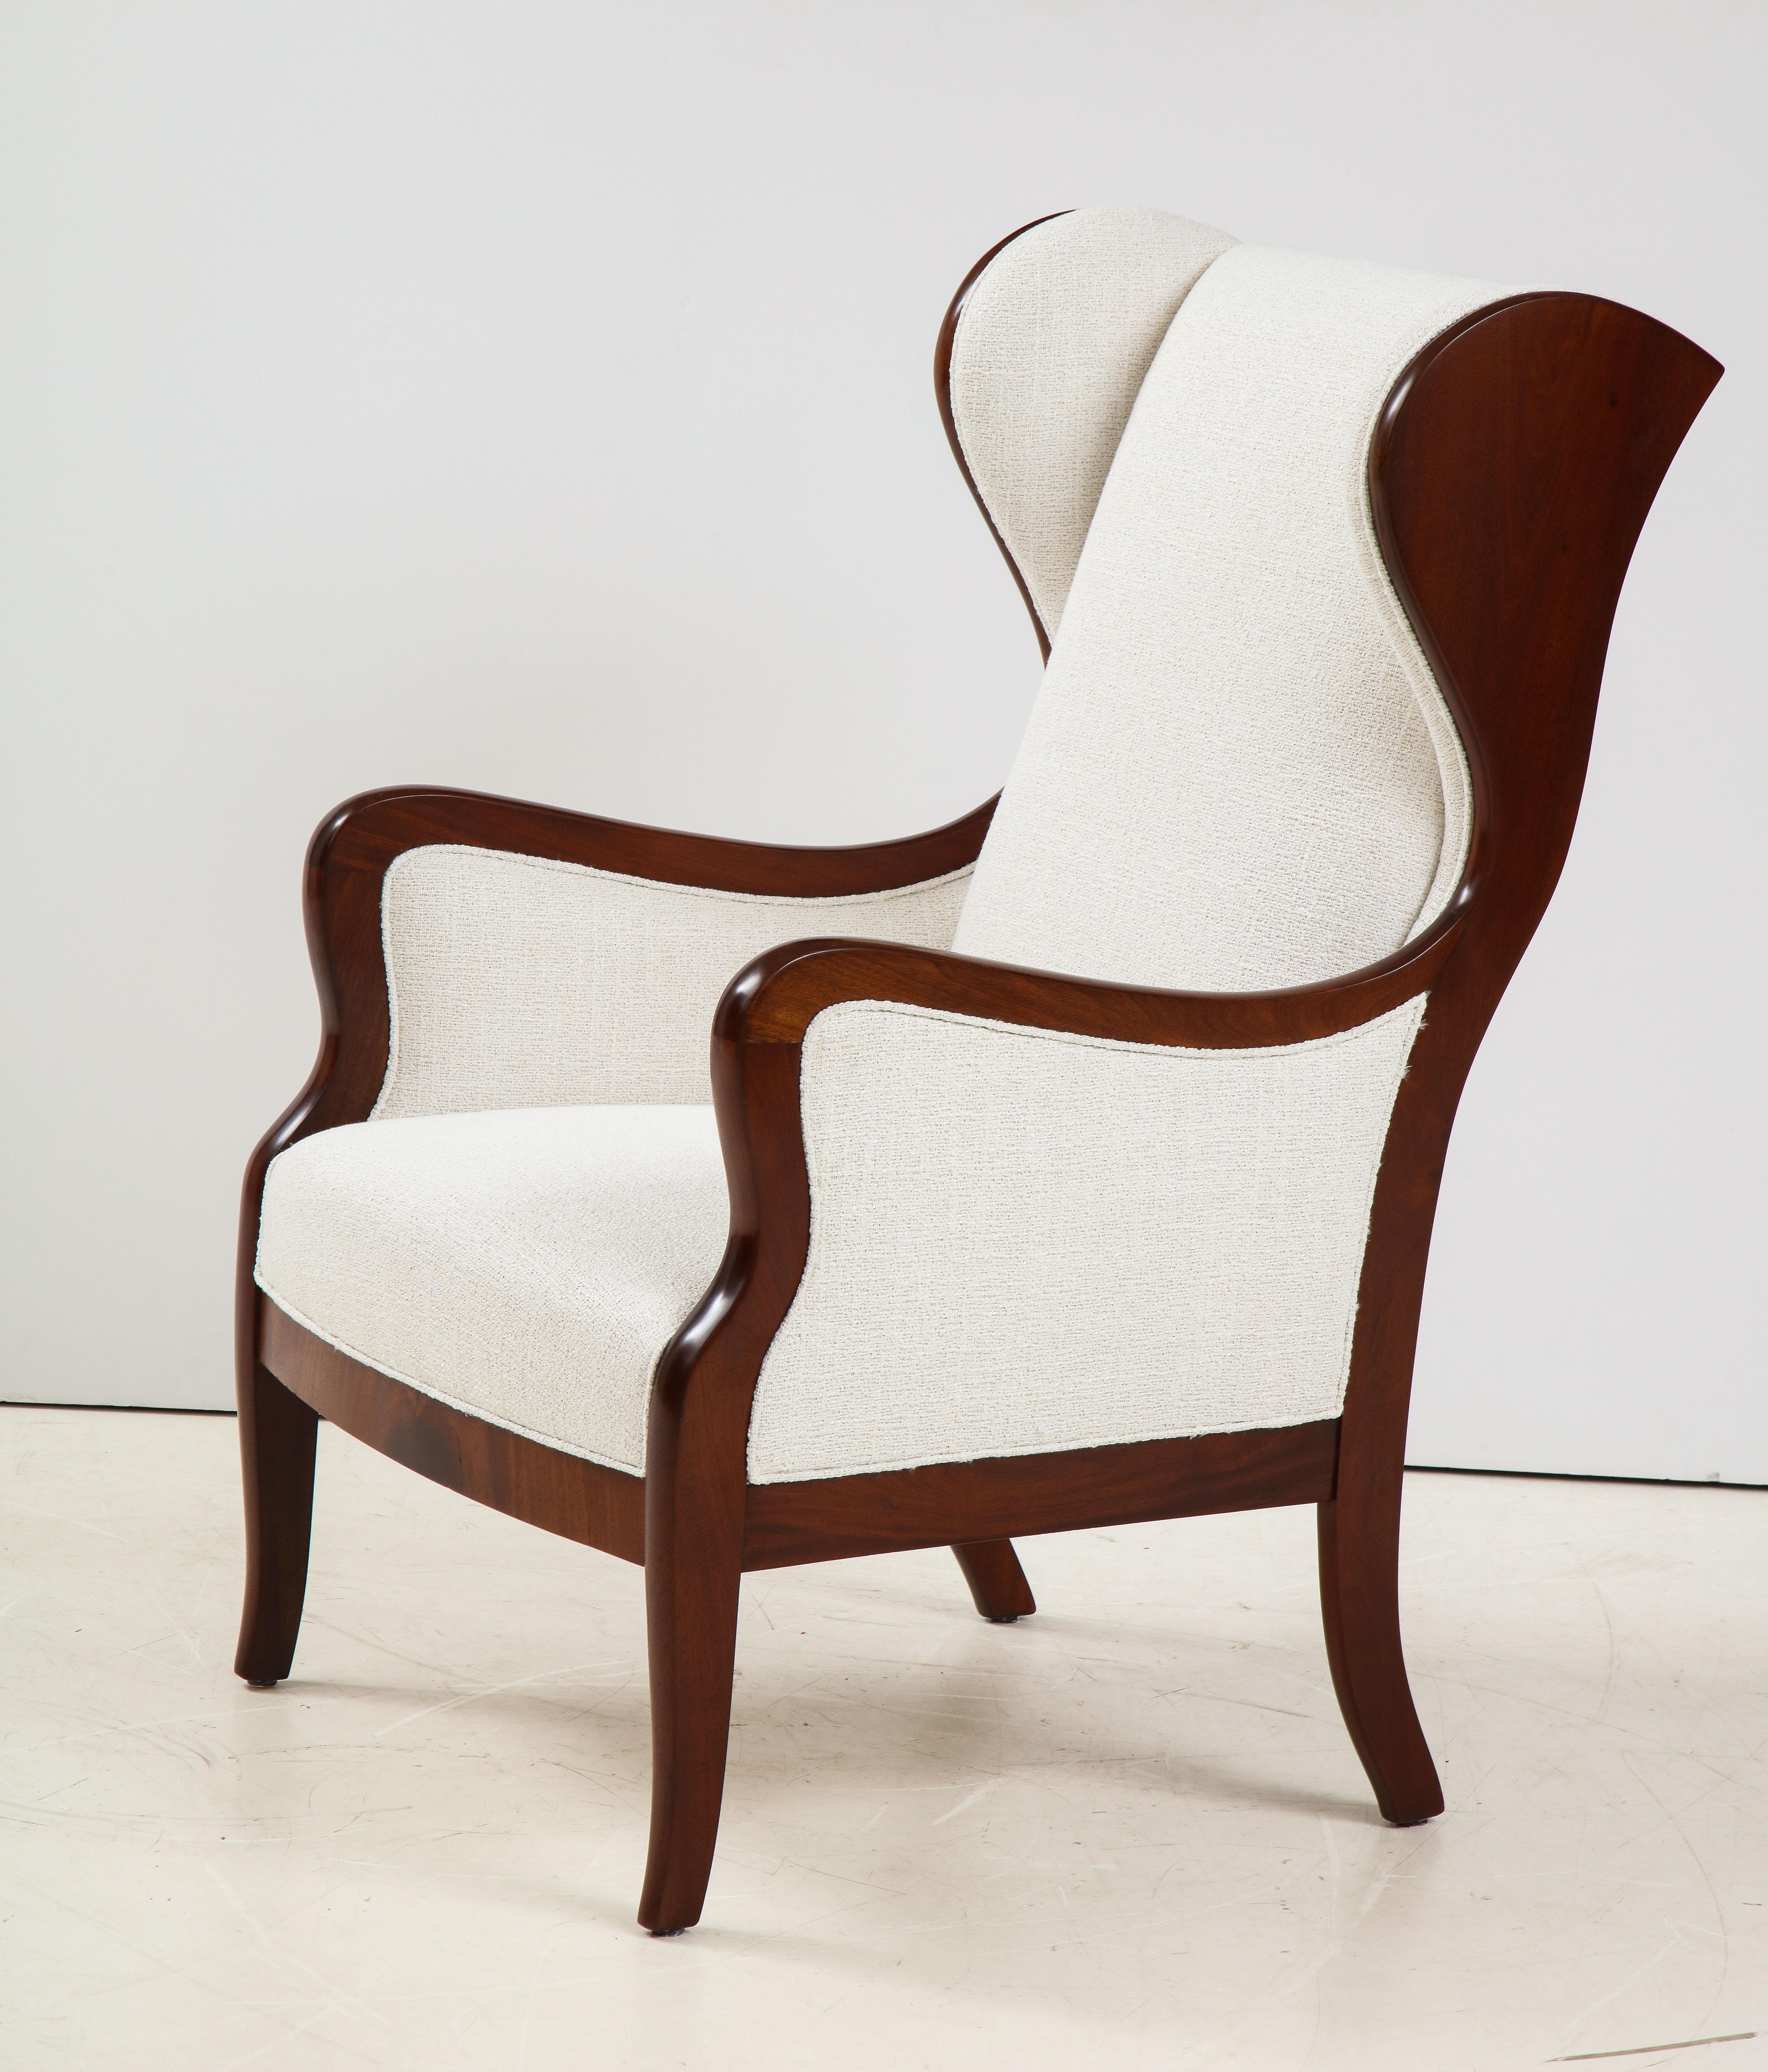 Scandinavian Modern Frits Henningsen Mahogany and Upholstered Wing Chair, Circa 1940-50